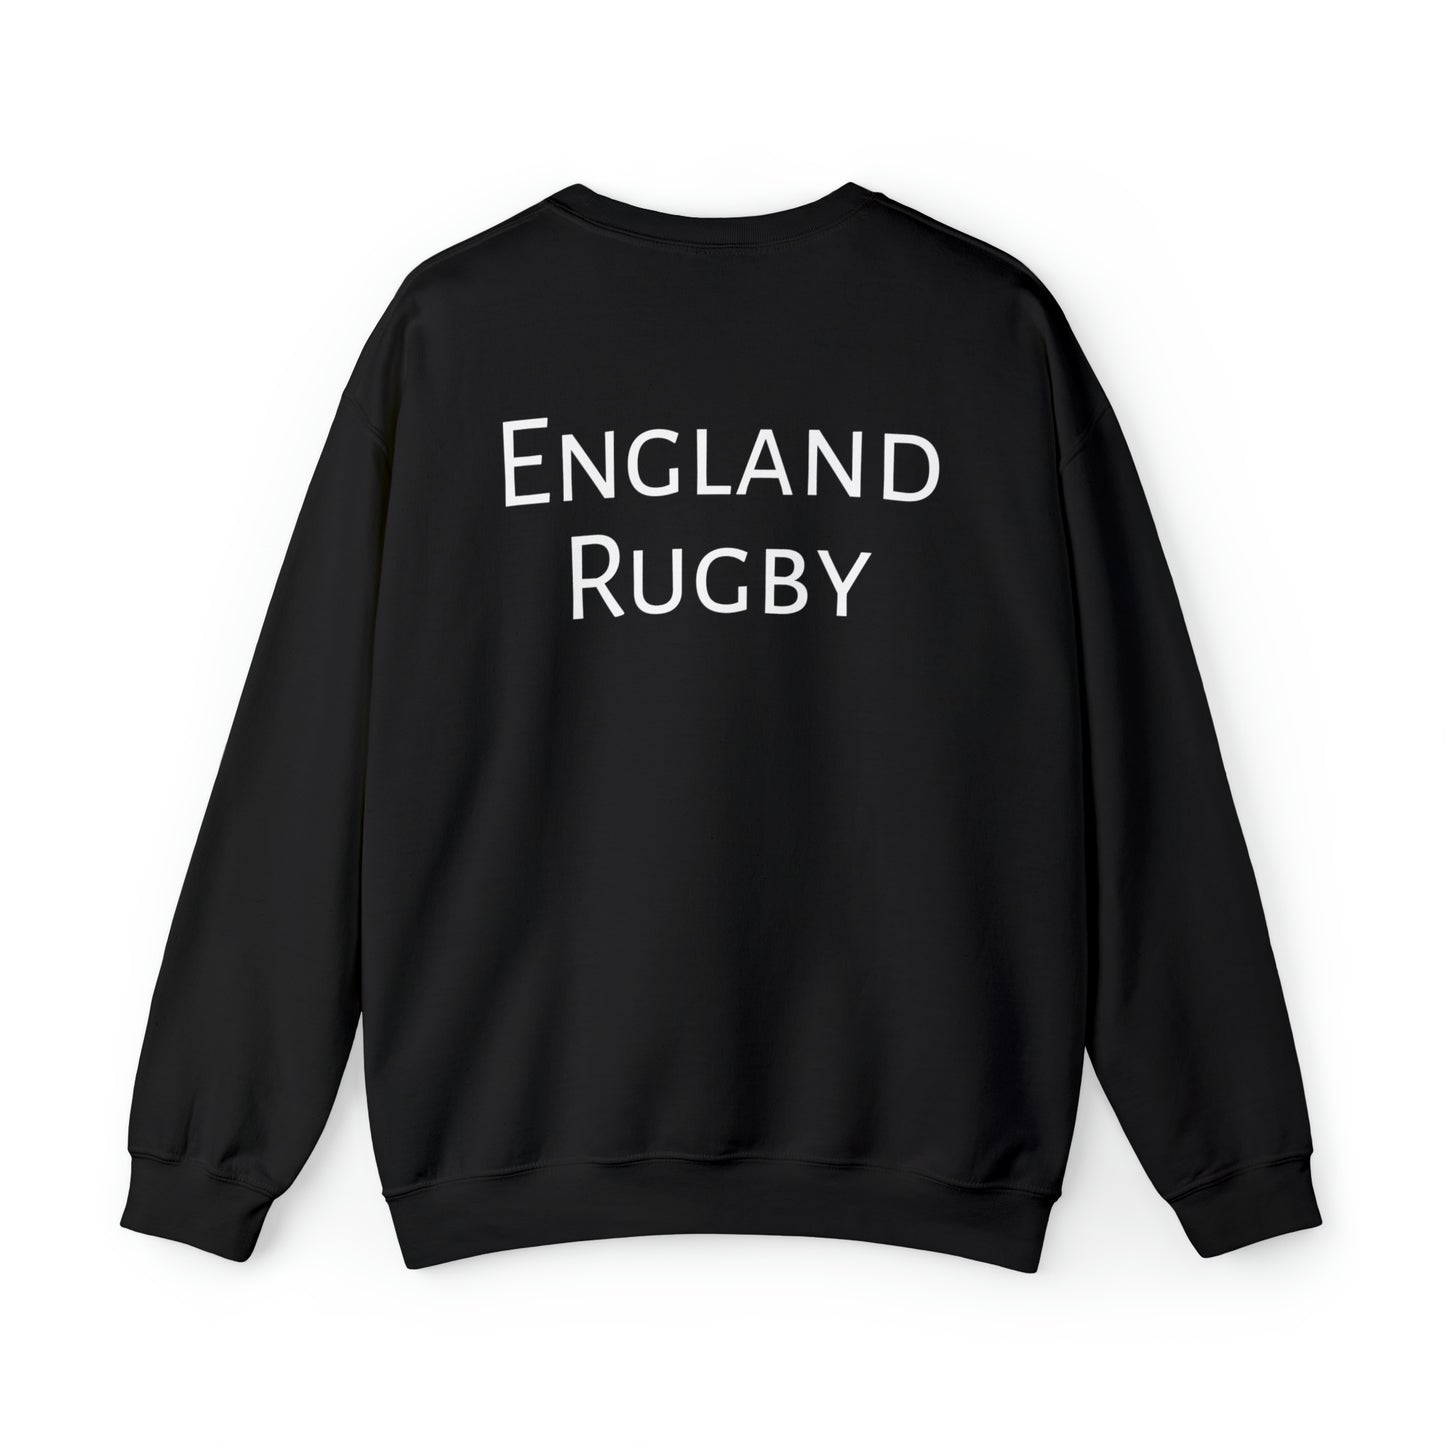 Ready Rooney - black sweatshirt